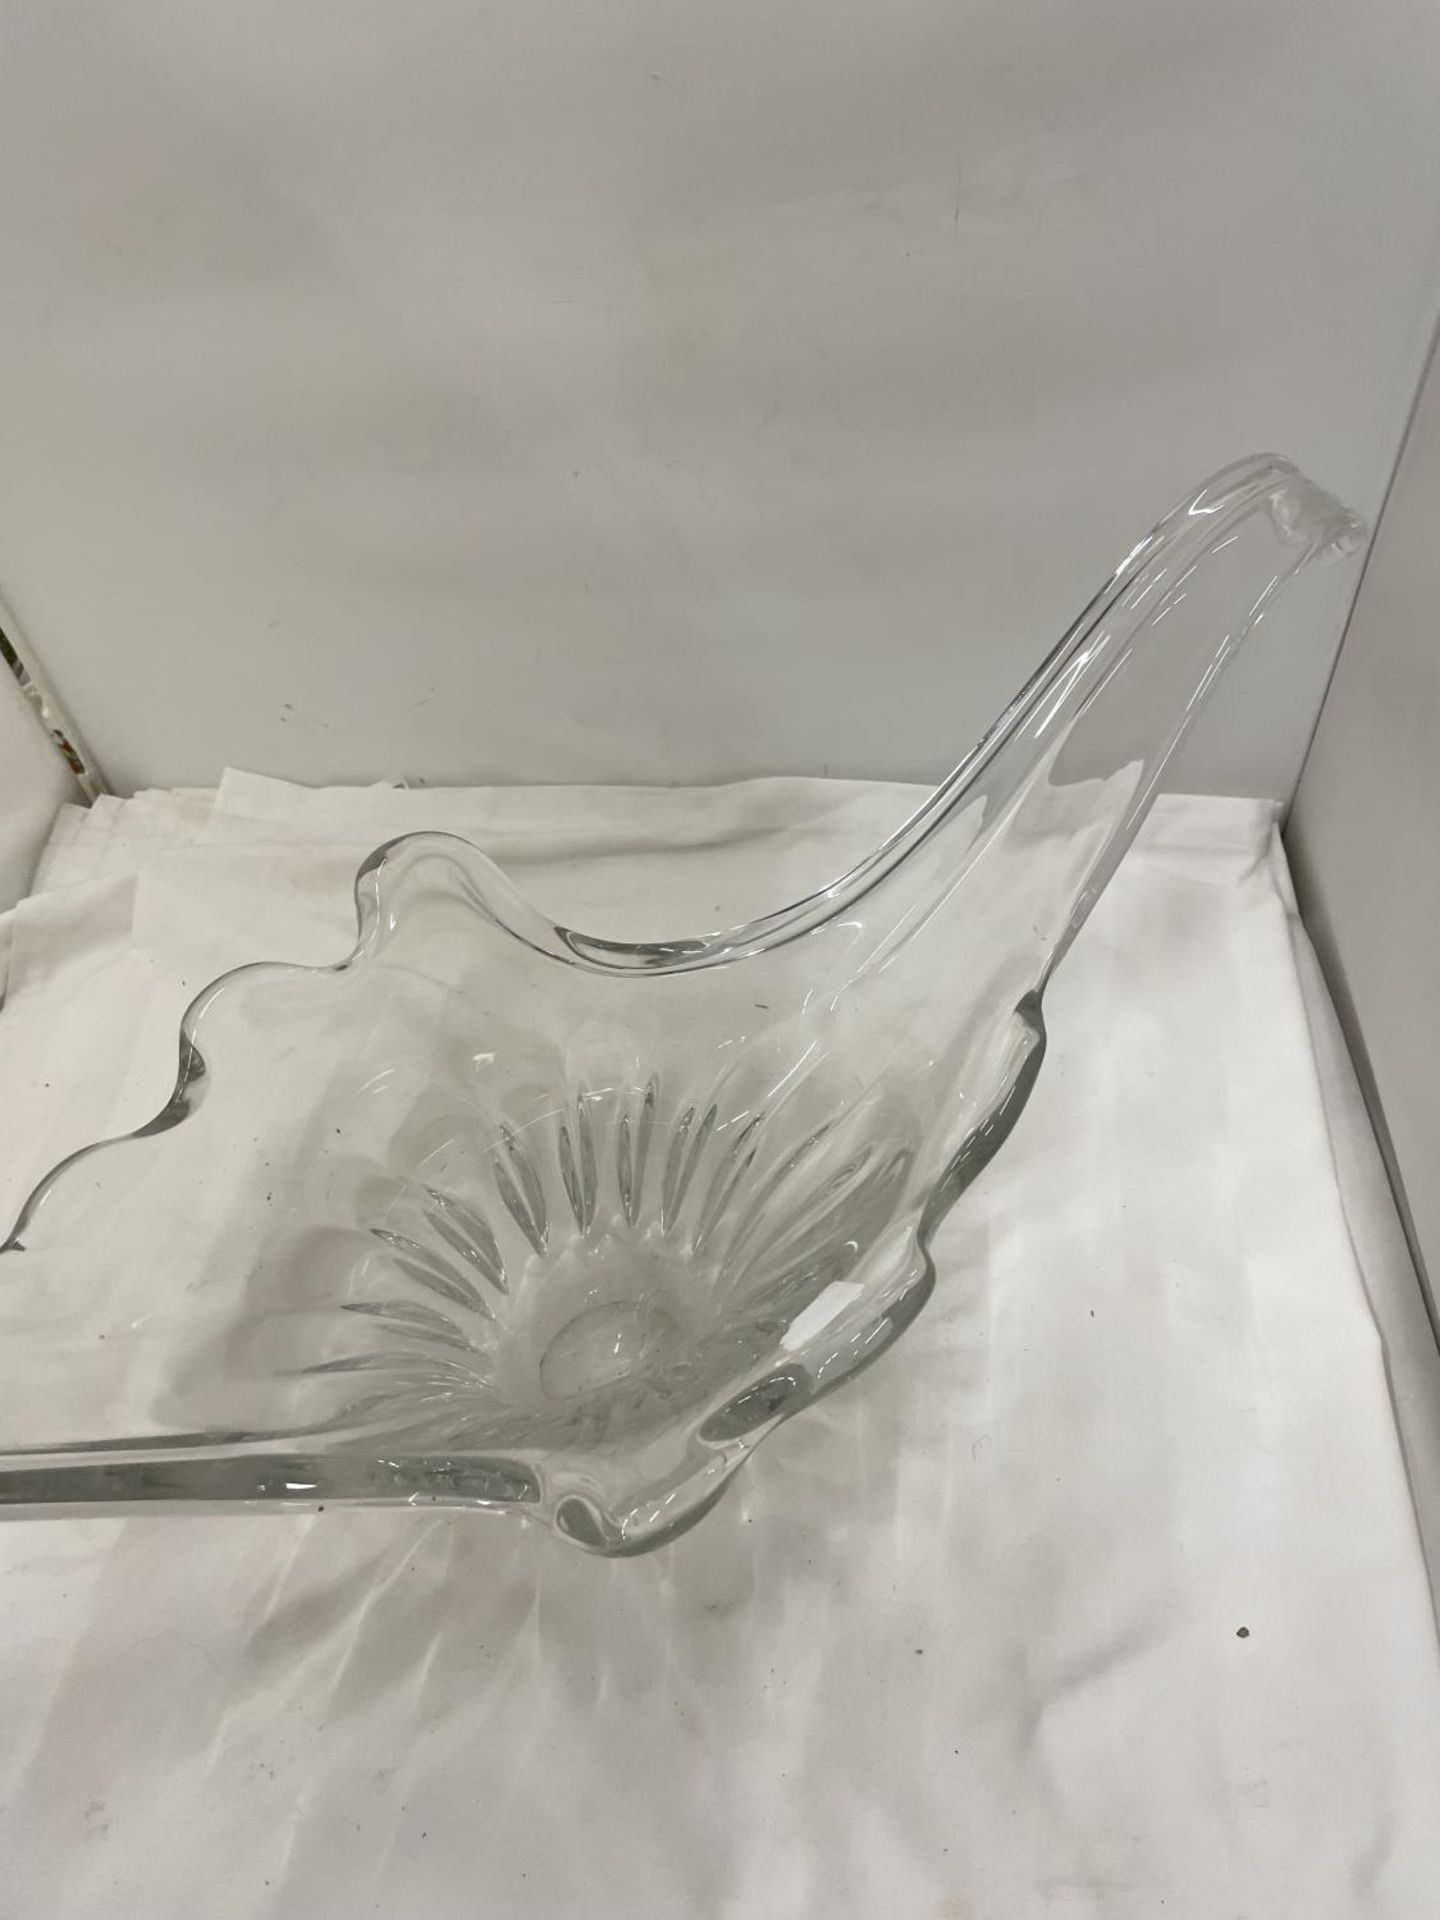 A LARGE HEAVY ART GLASS GONDOLA SHAPED BOWL HEIGHT 27CM, LENGTH 65CM, WIDTH 26CM - Image 2 of 5